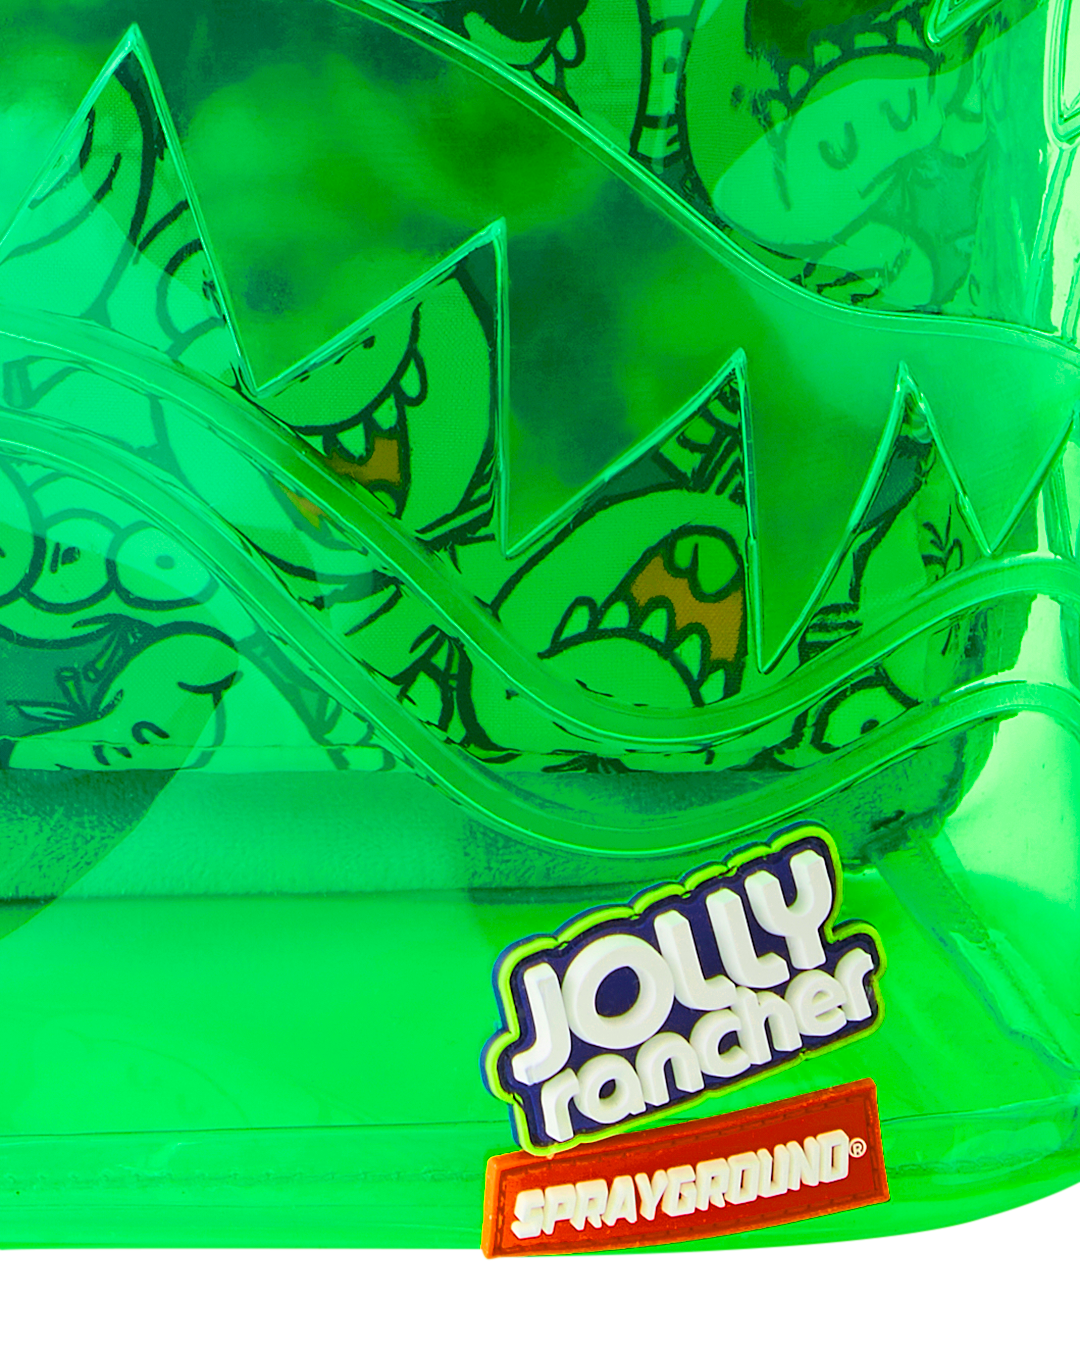 Sprayground Unisex Jolly Rancher Backpack 910B4100NSZ Green